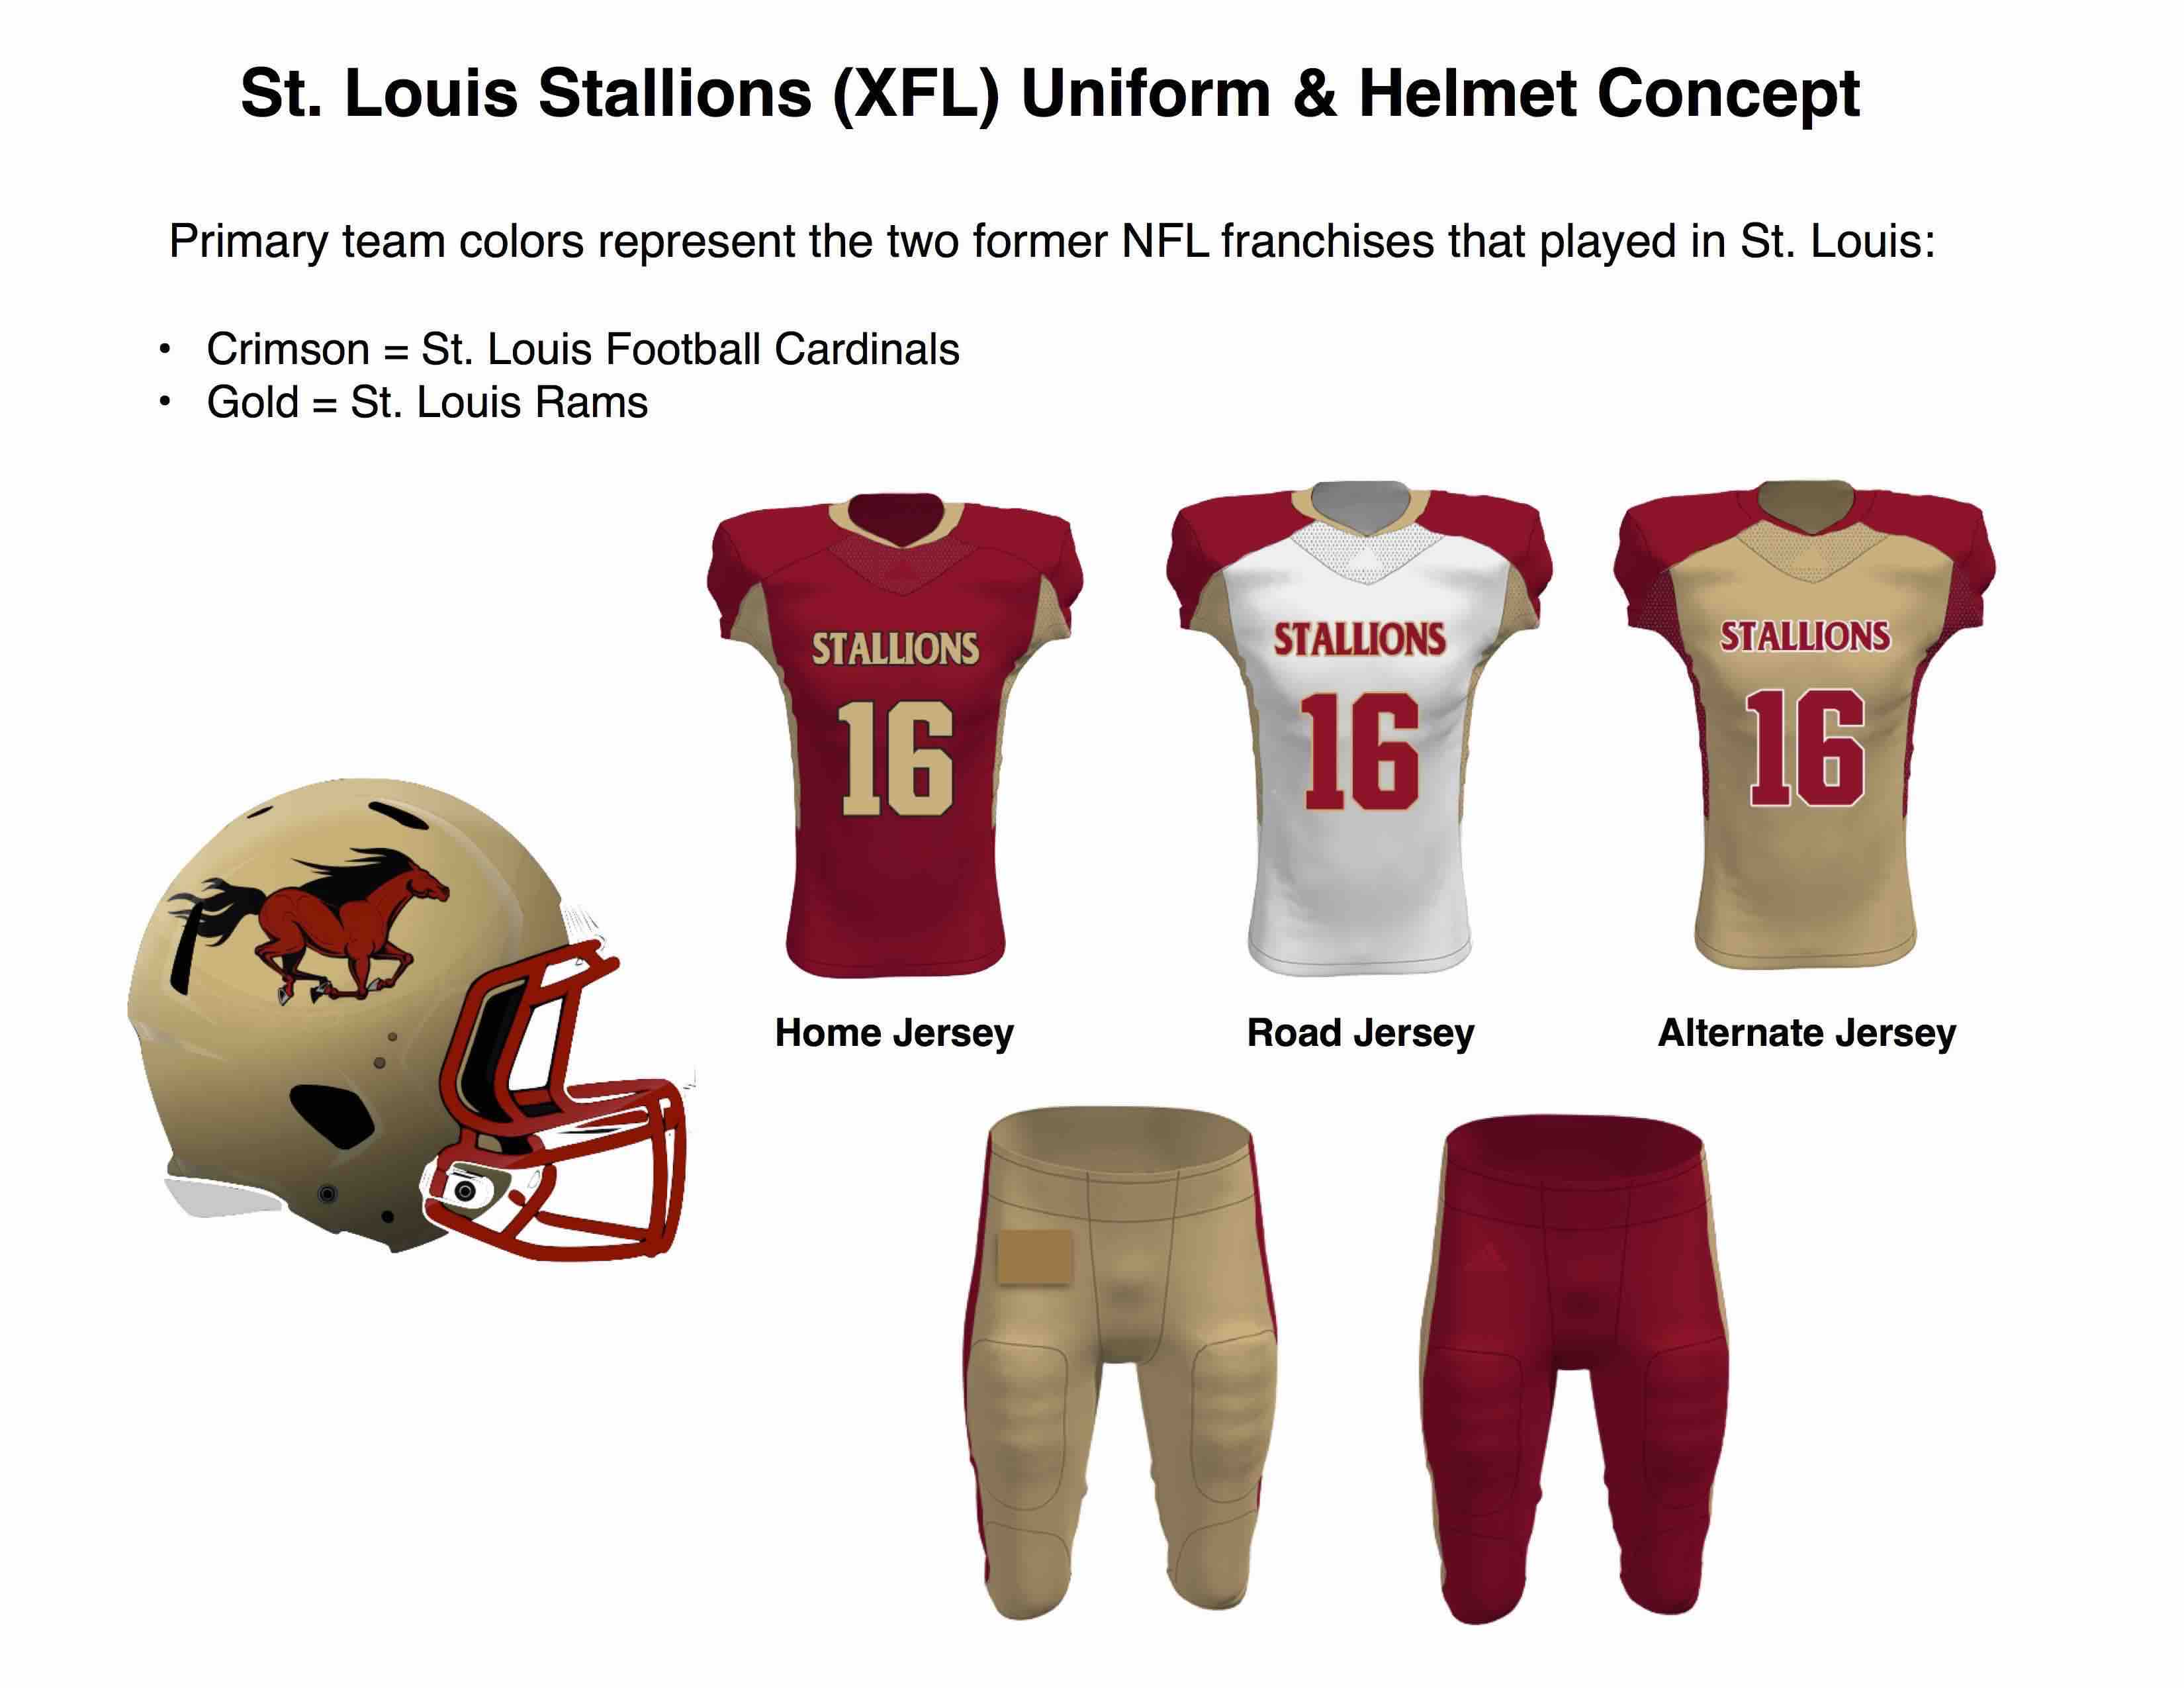 STL_Stallions_Uniform_Helmet_Concept_small.jpg